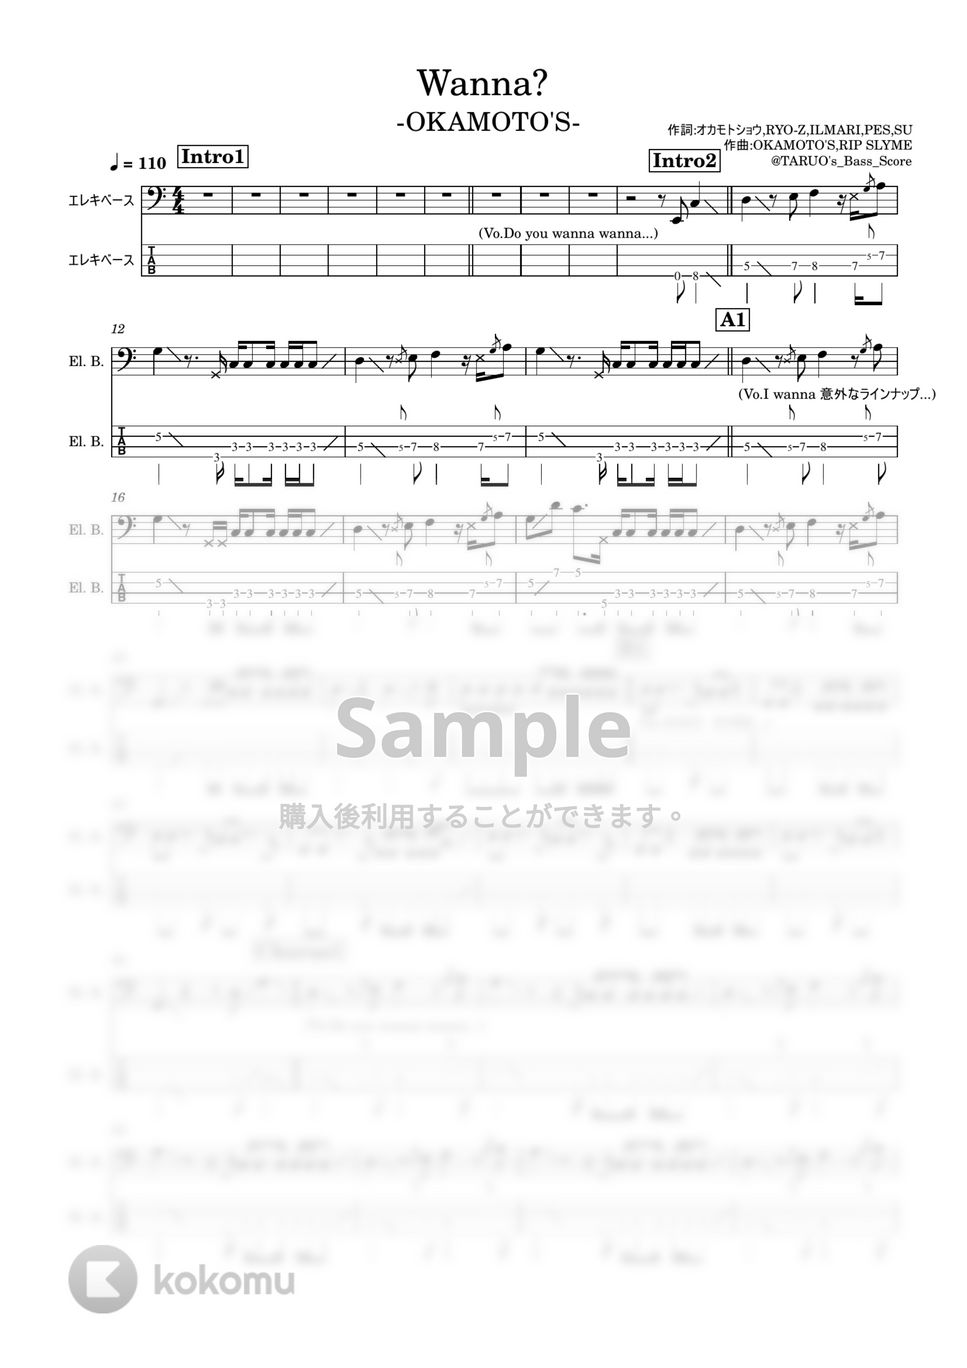 OKAMOTO'S×RIP SLYME - Wanna? (ベース/TAB/ハマ・オカモト) by TARUO's_Bass_Score